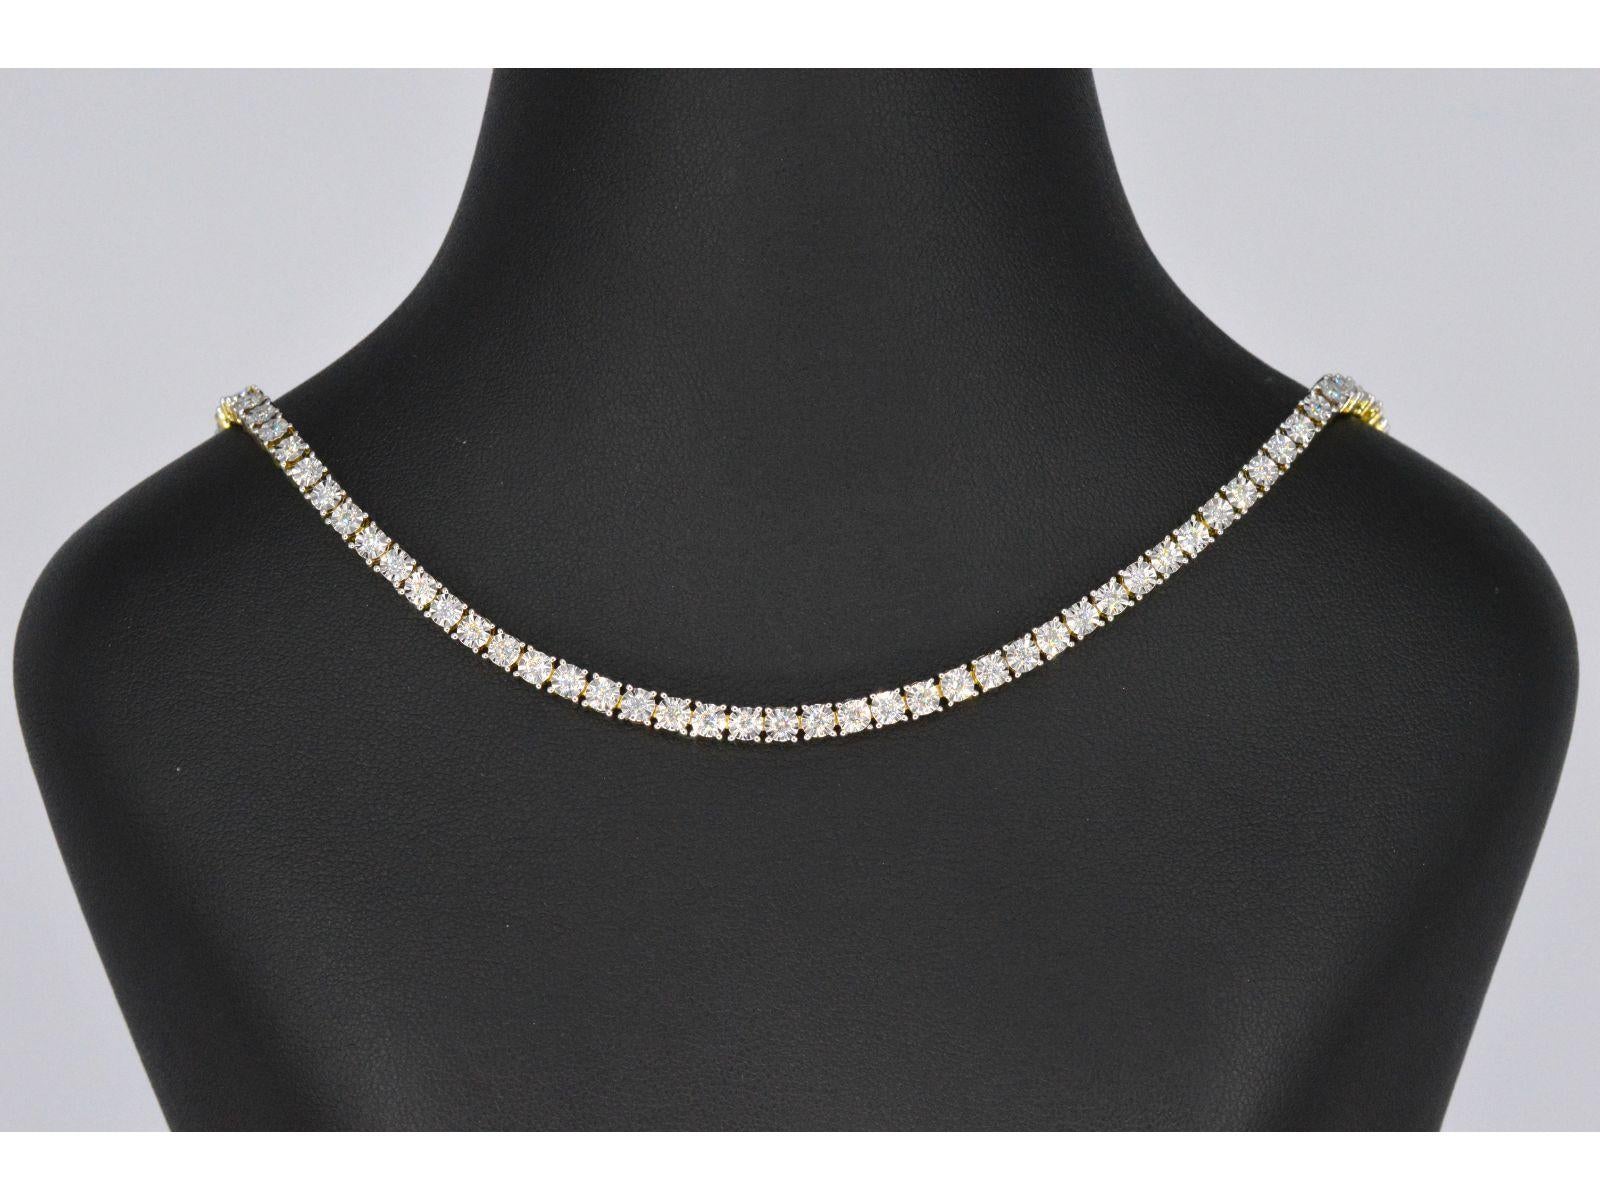 

Diamonds
Weight: 3.50 carats
Cut: Brilliant cut
Colour: F-G
Clarity: SI-P
Quality: Very good

Jewel: Necklace
Weight: 25 gram
Hallmark: 14 karat 
Length: 42 cm
Condition: New

Retail value: € 10.500
